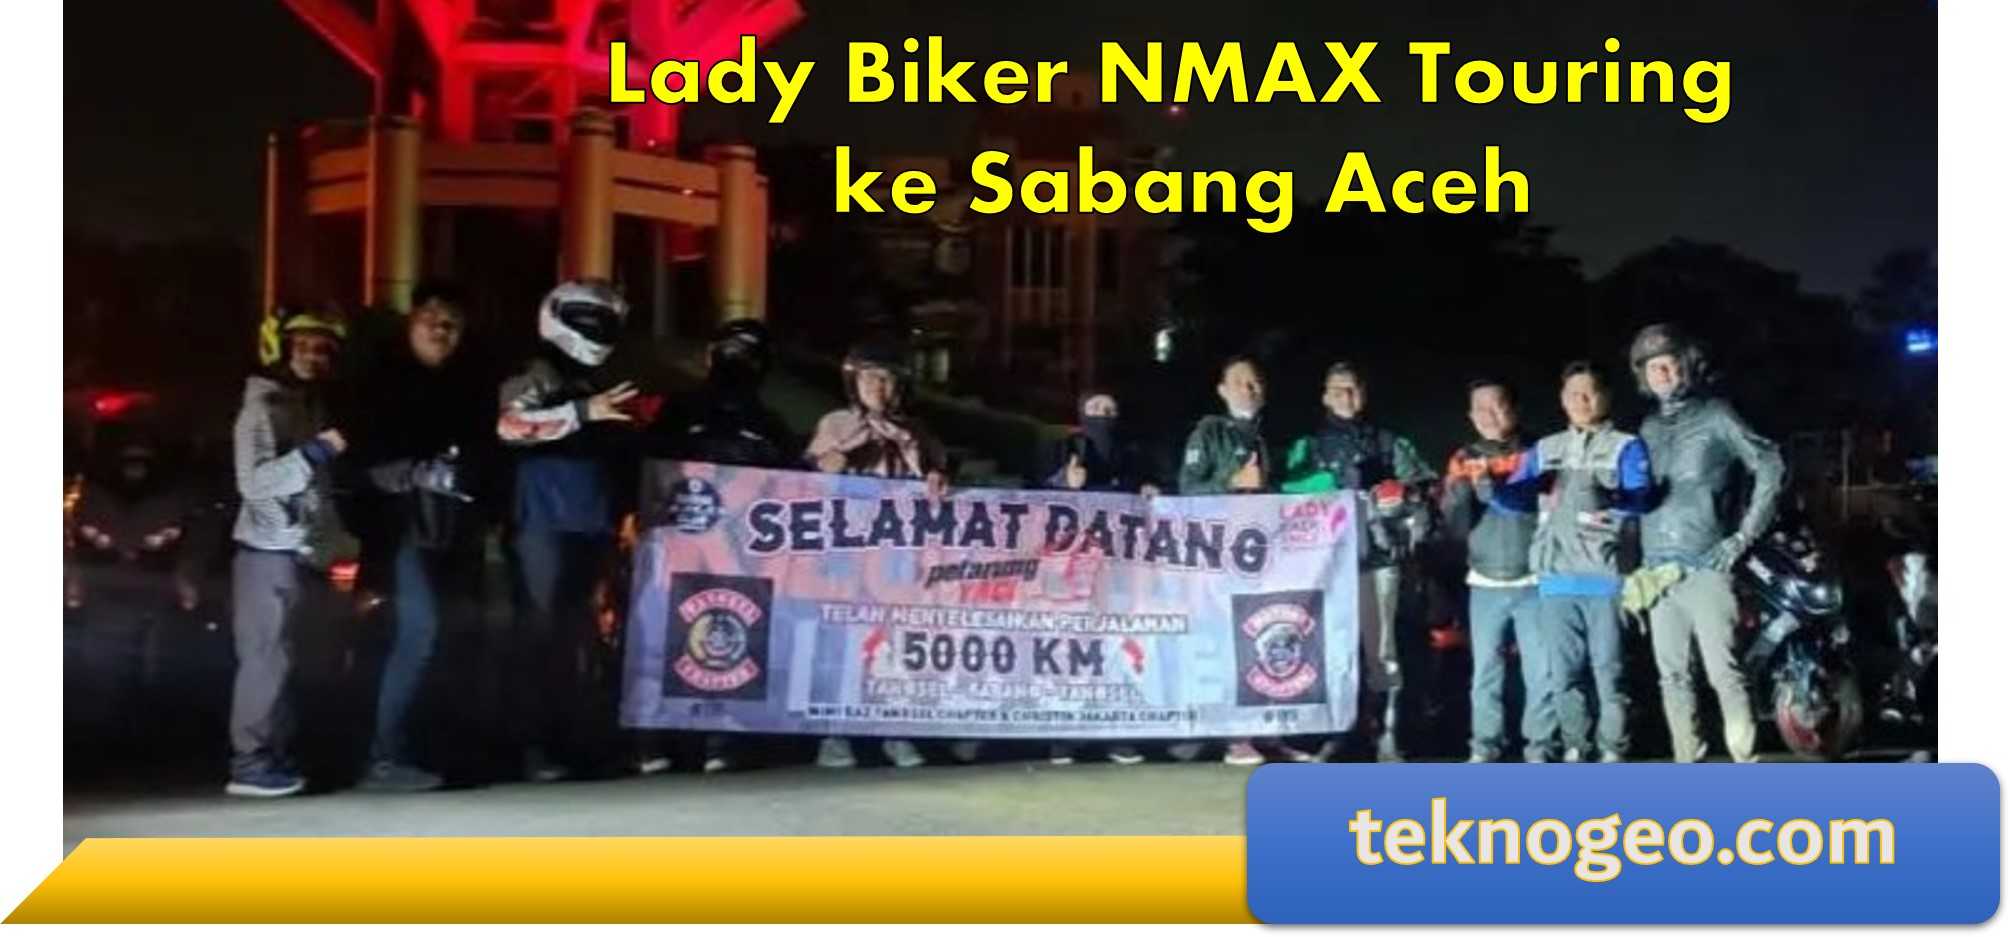 Lady Biker NMAX 155 Connected Touring ke Sabang Aceh